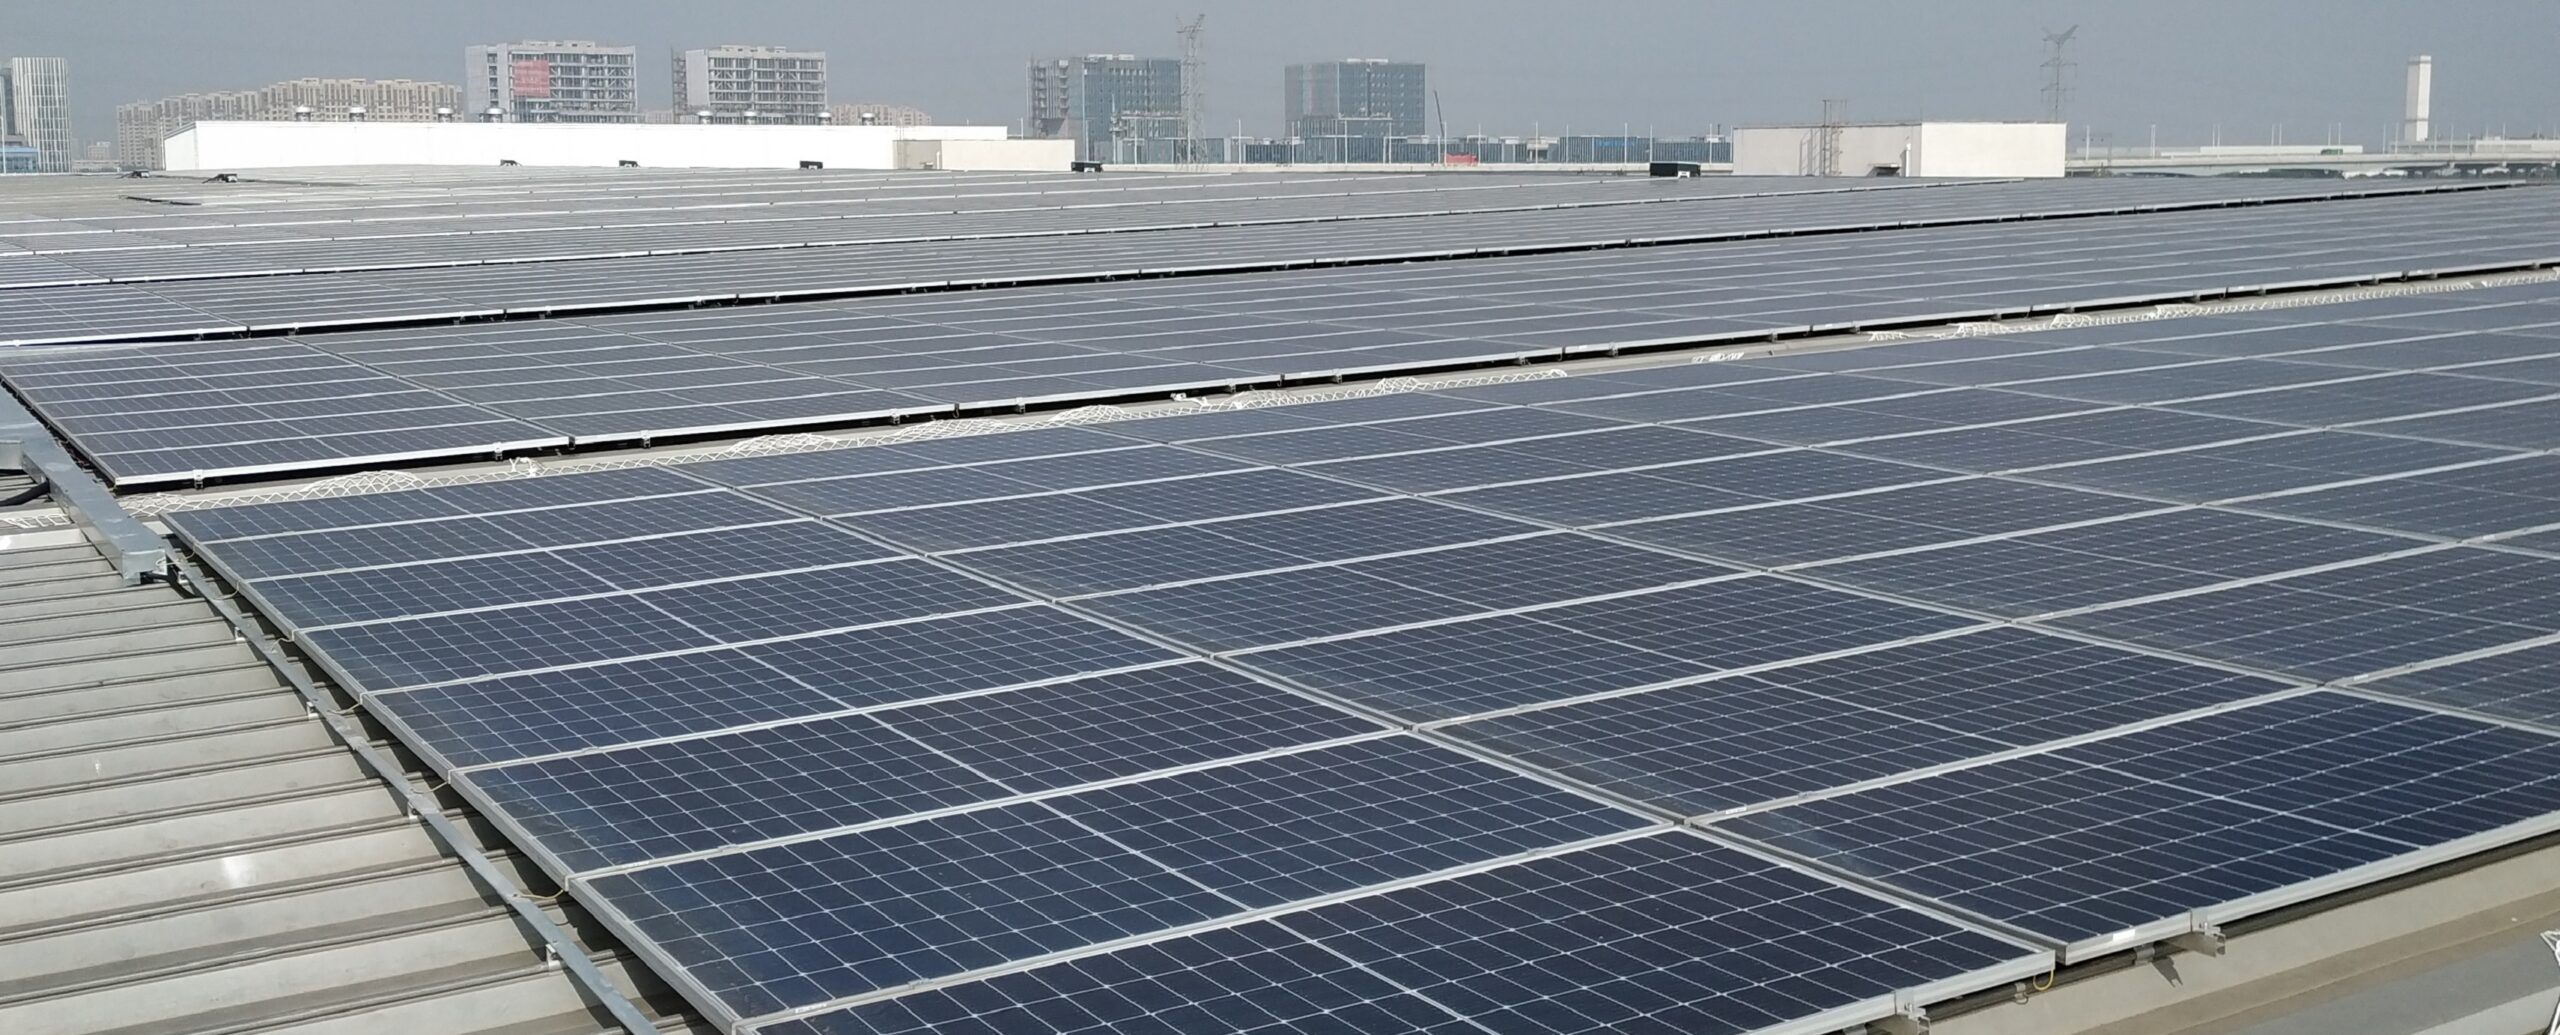 YKK Achieves 100% Renewable Energy Purchasing at 31 Sites Worldwide